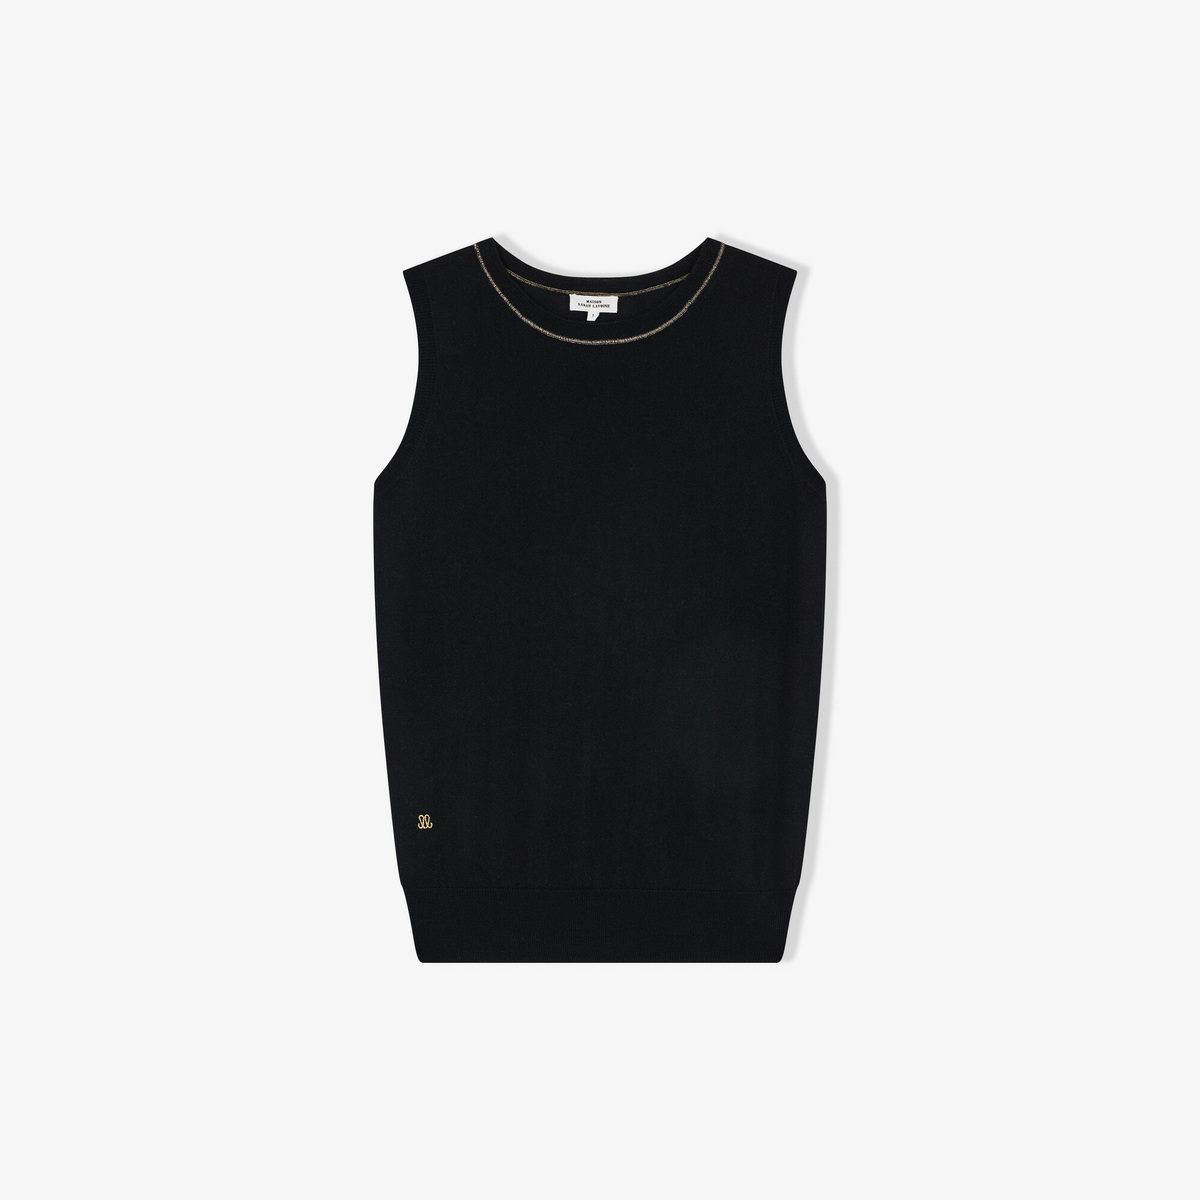 Villette jumper, Black - Sleeveless - Silk and cashmere - image 1